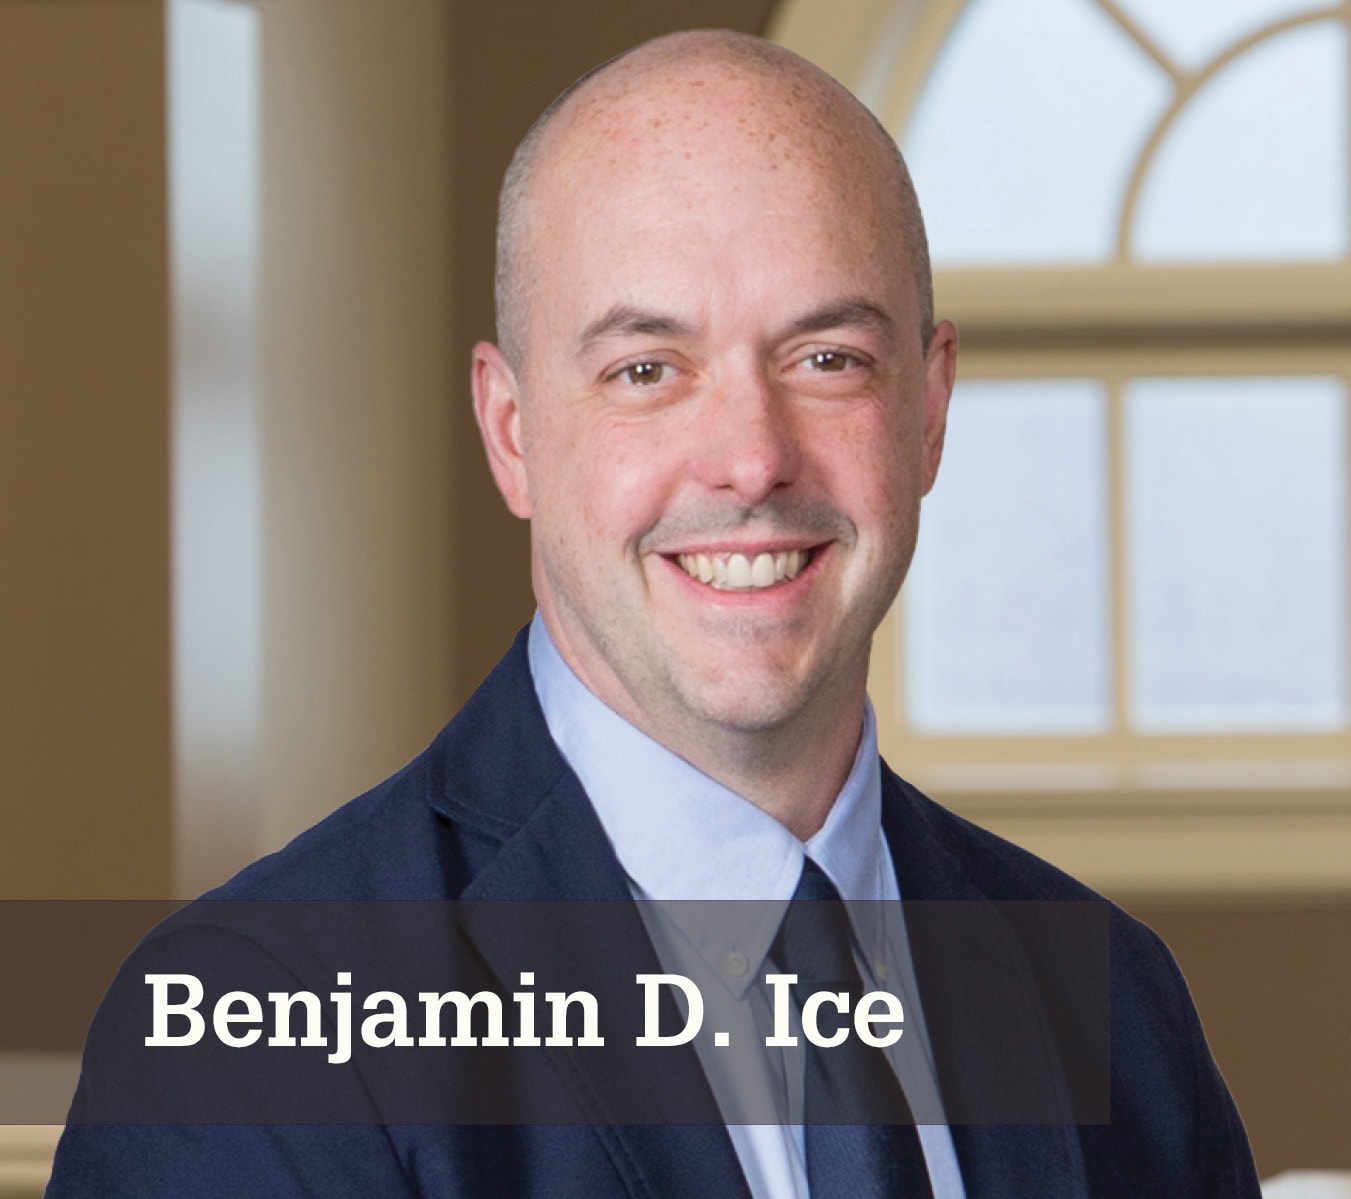 Benjamin D. Ice